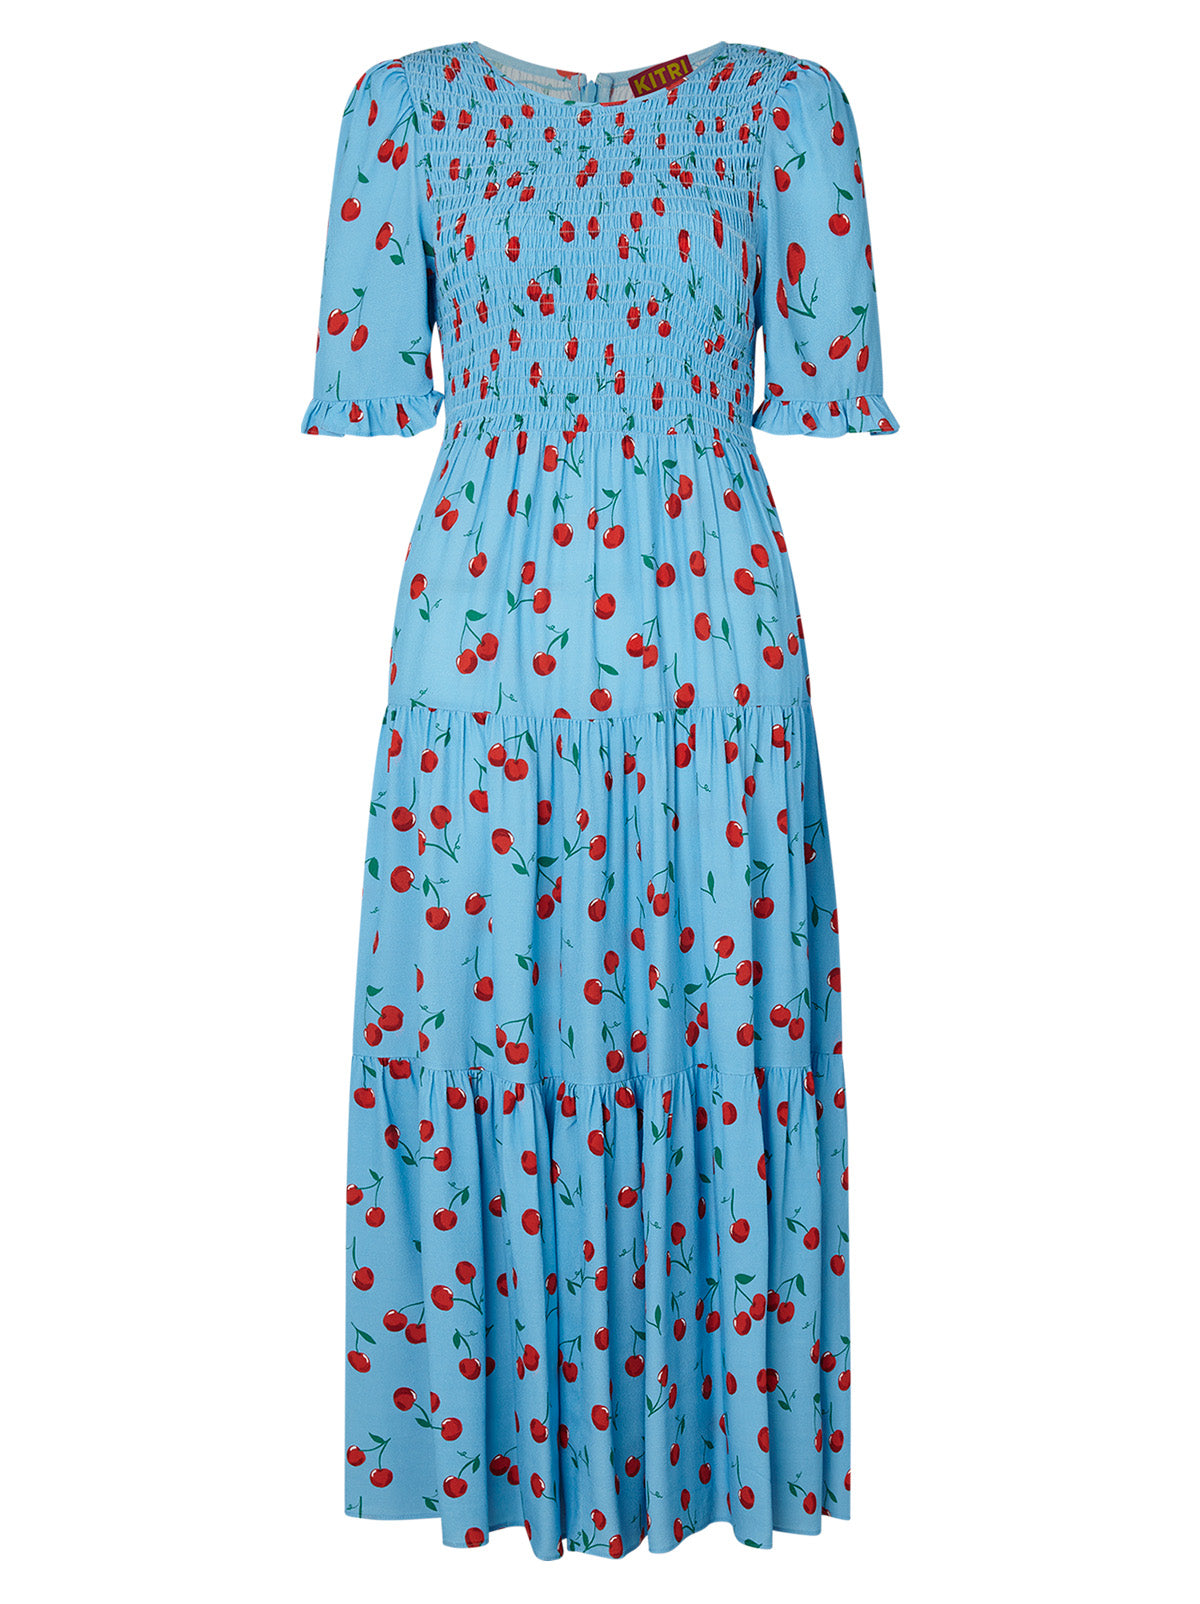 Gracie Blue Cherry Shirred Dress by KITRI Studio